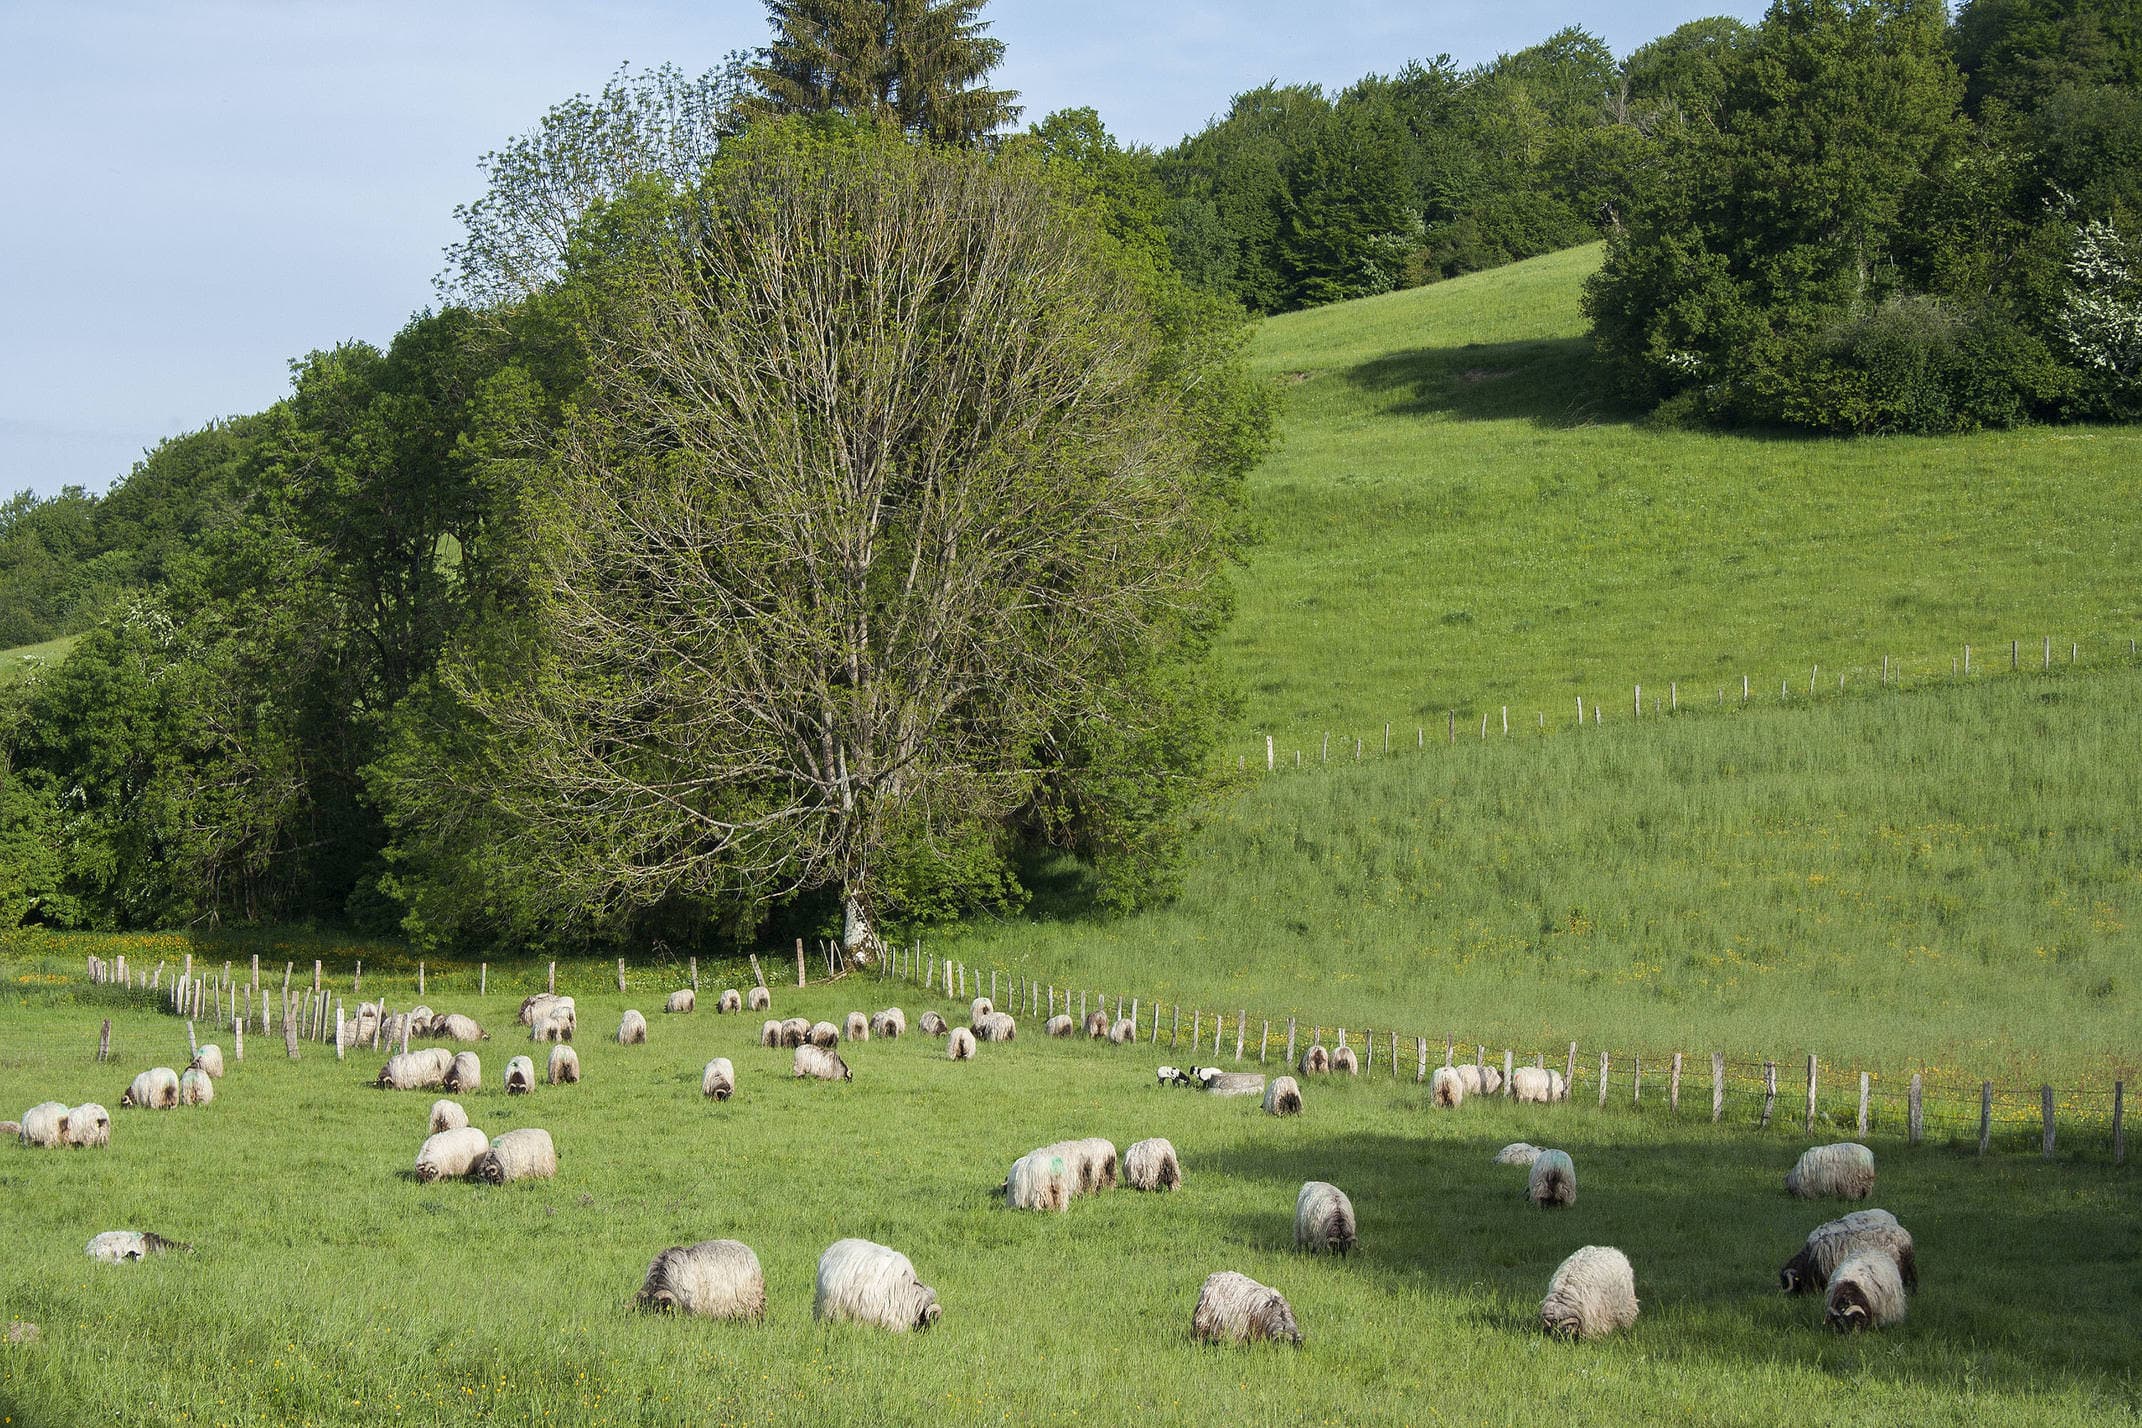 Spain navarre camino roncesvalles sheep c dmartin